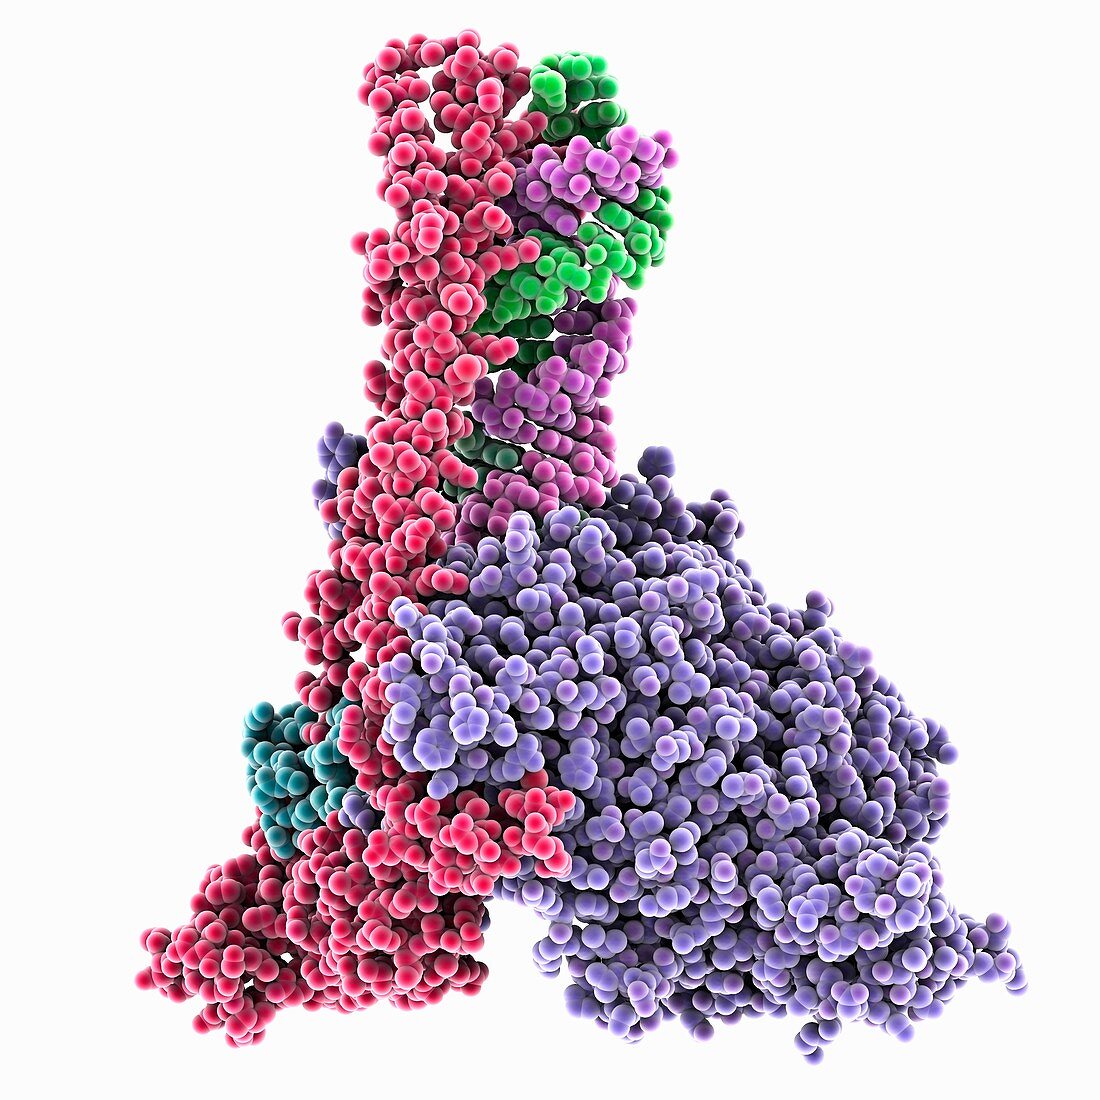 Replicating SARS-CoV-2 polymerase, illustration